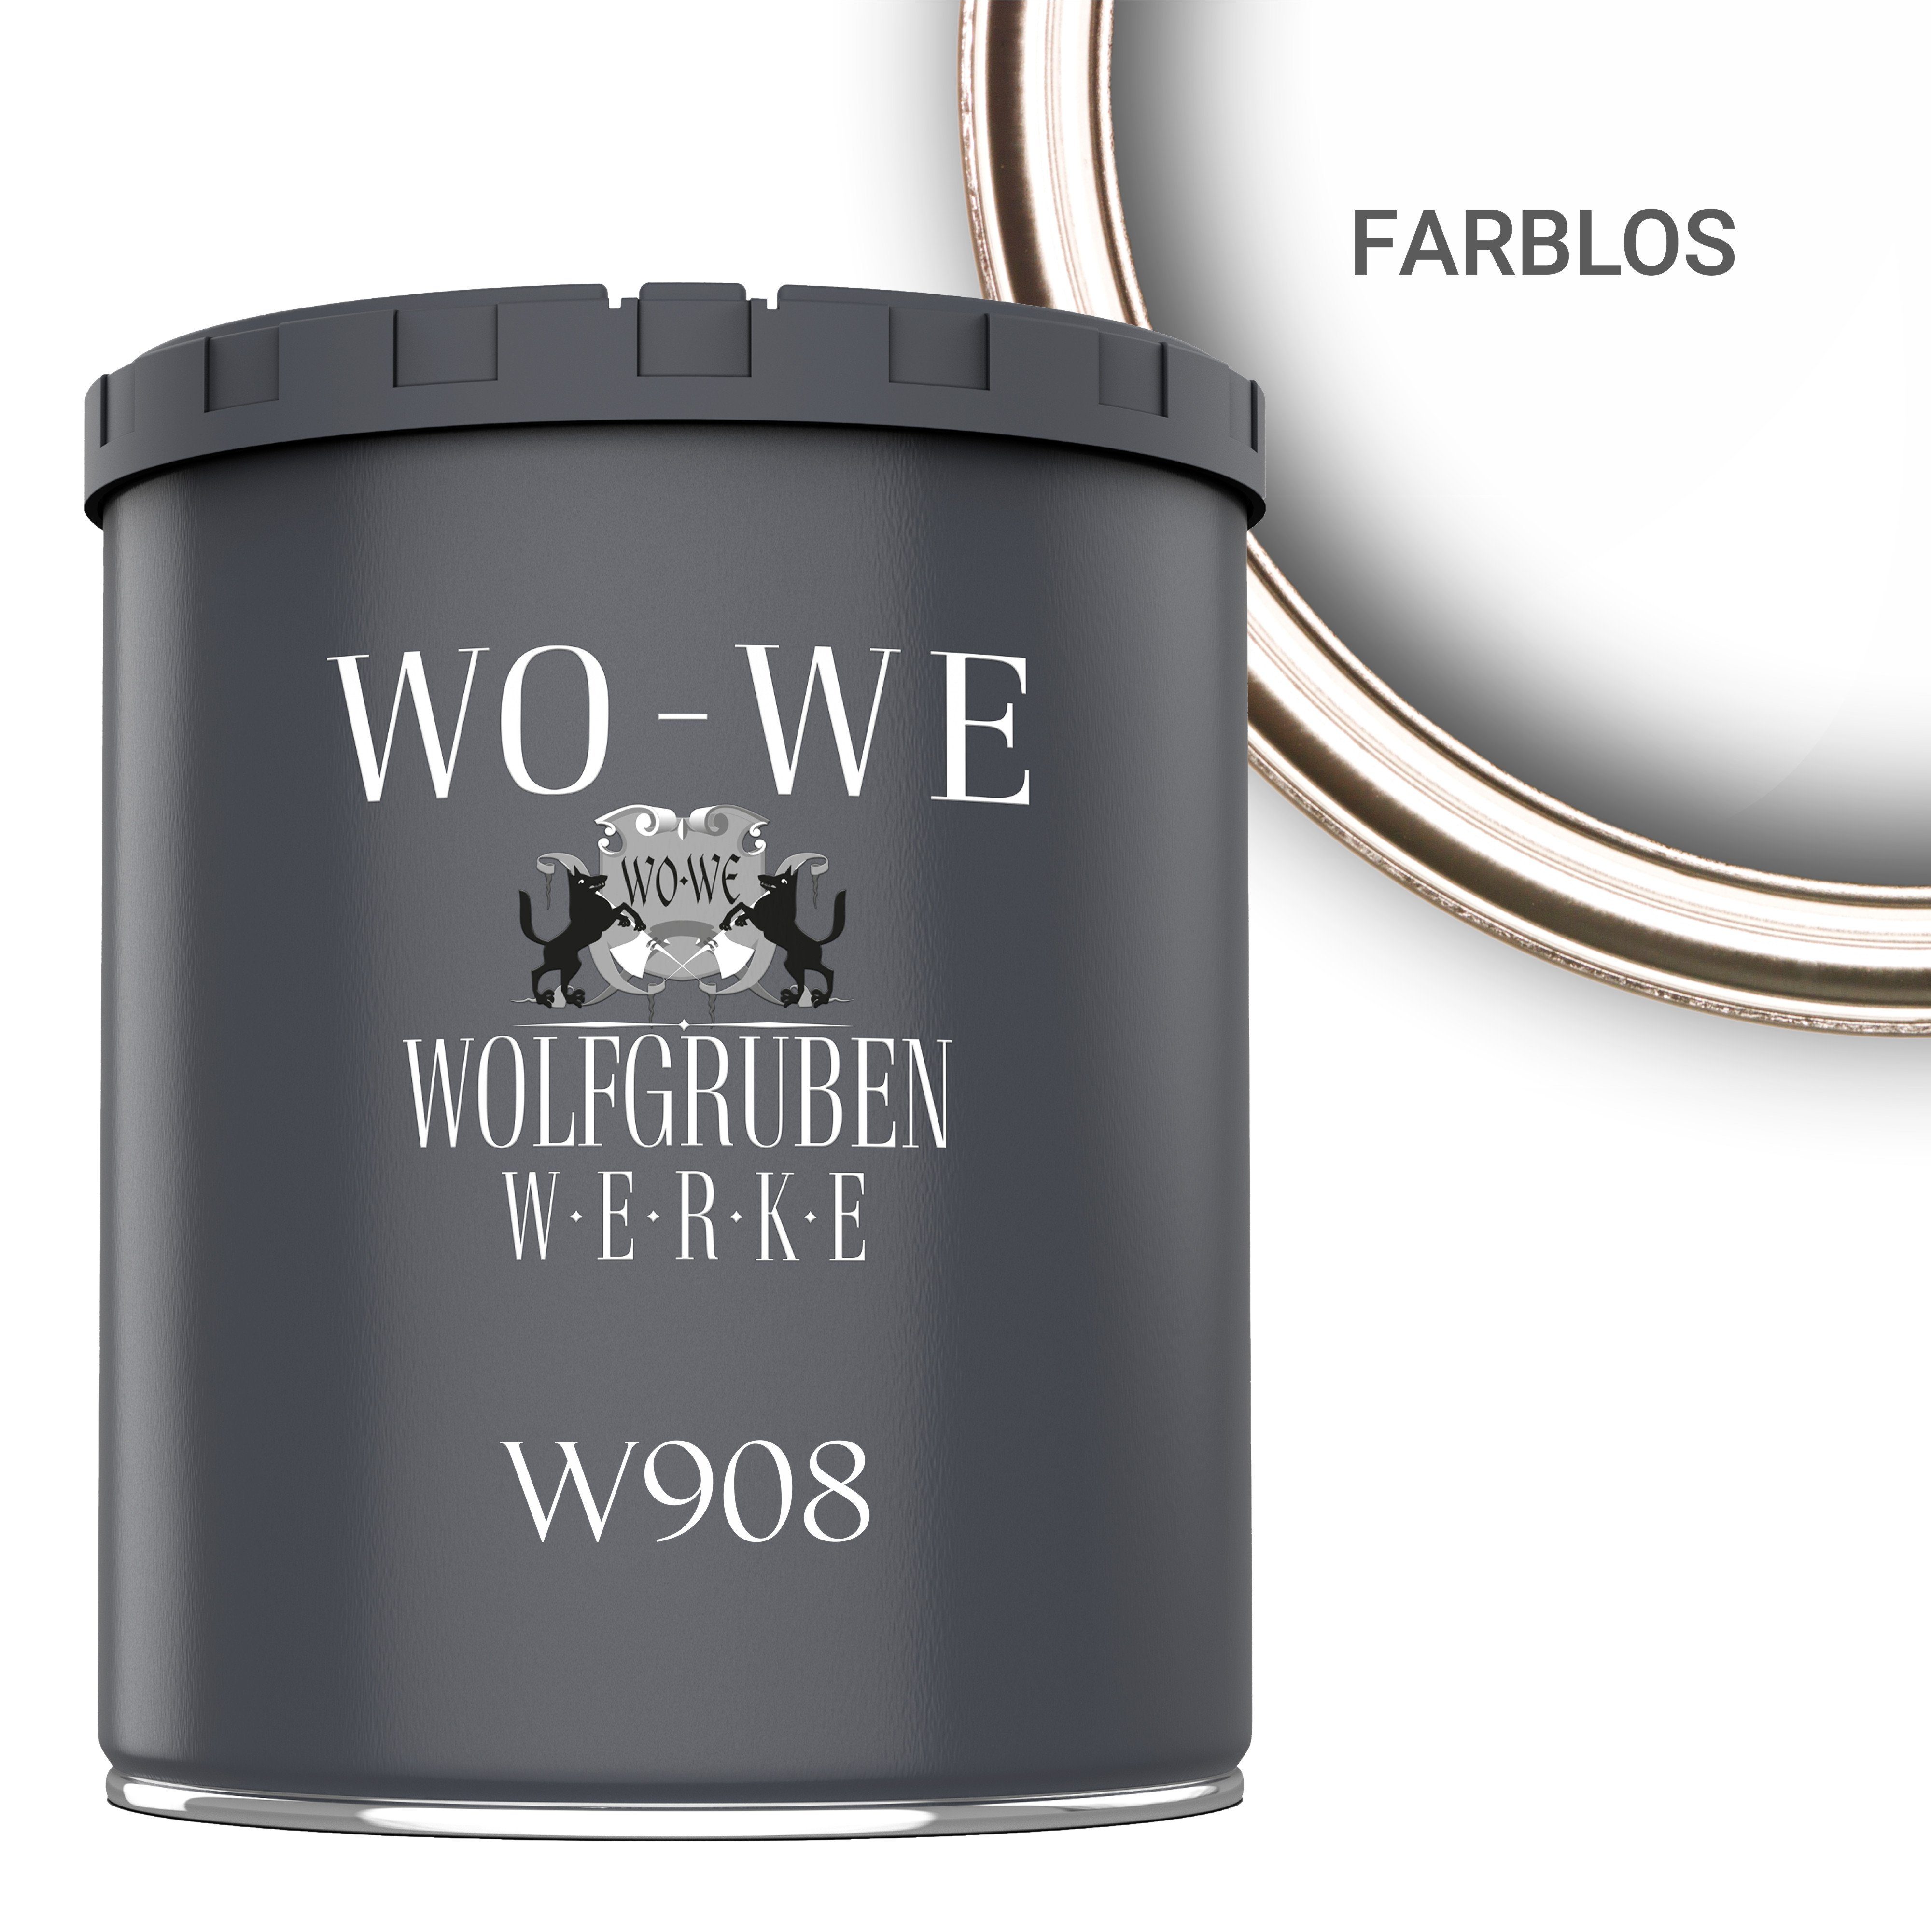 WO-WE Metallschutzlack Metallschutzfarbe 2,5L, - Außenbereich Metalllack 4in1 W908, Metallfarbe Farblos 1L